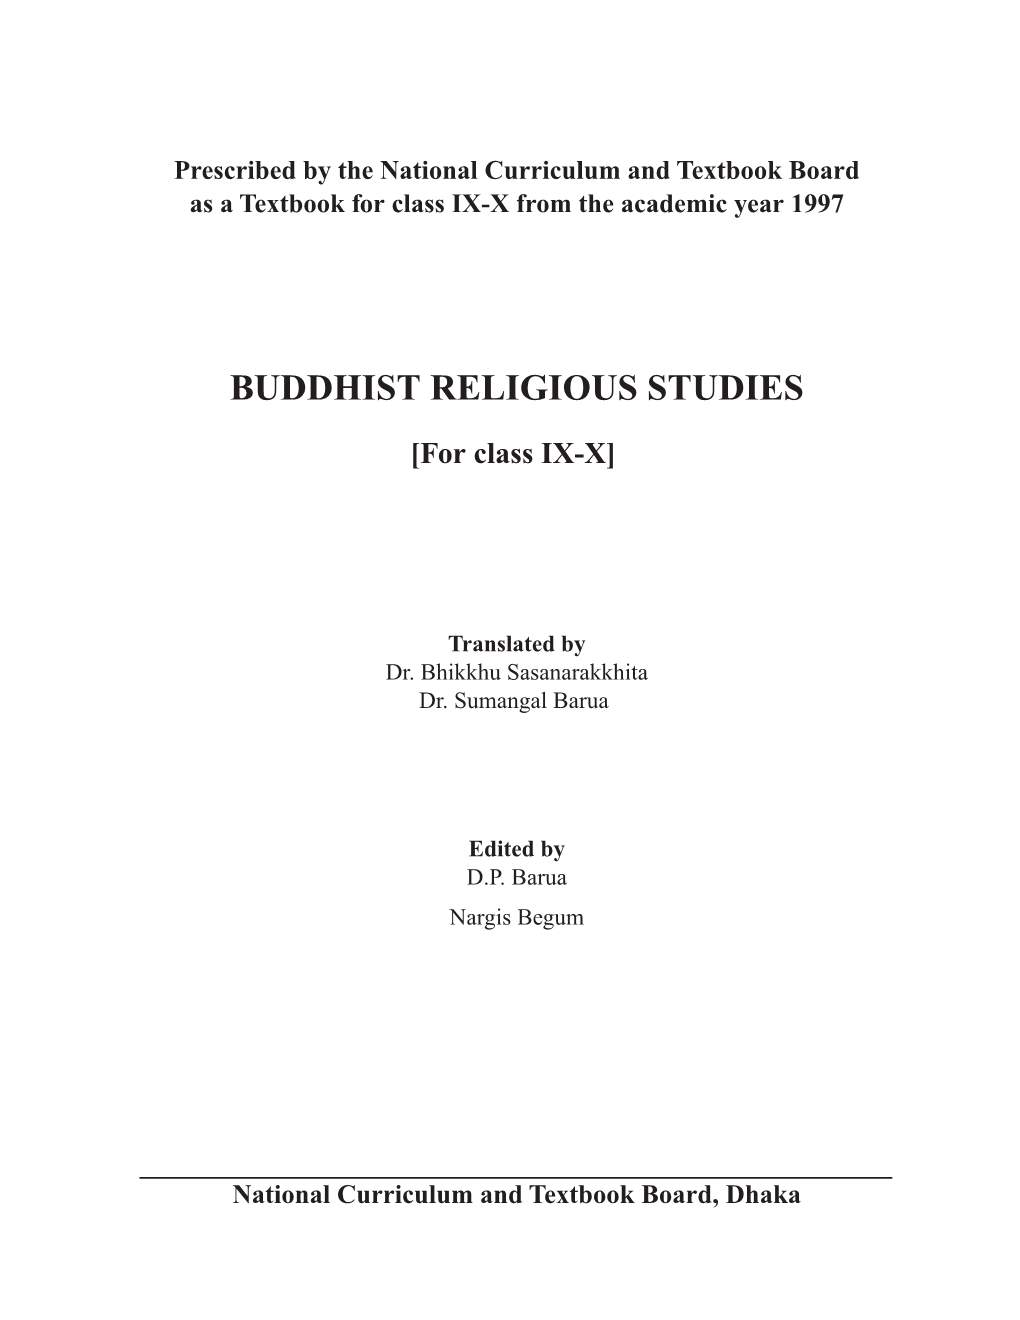 Buddhist Religious Studies